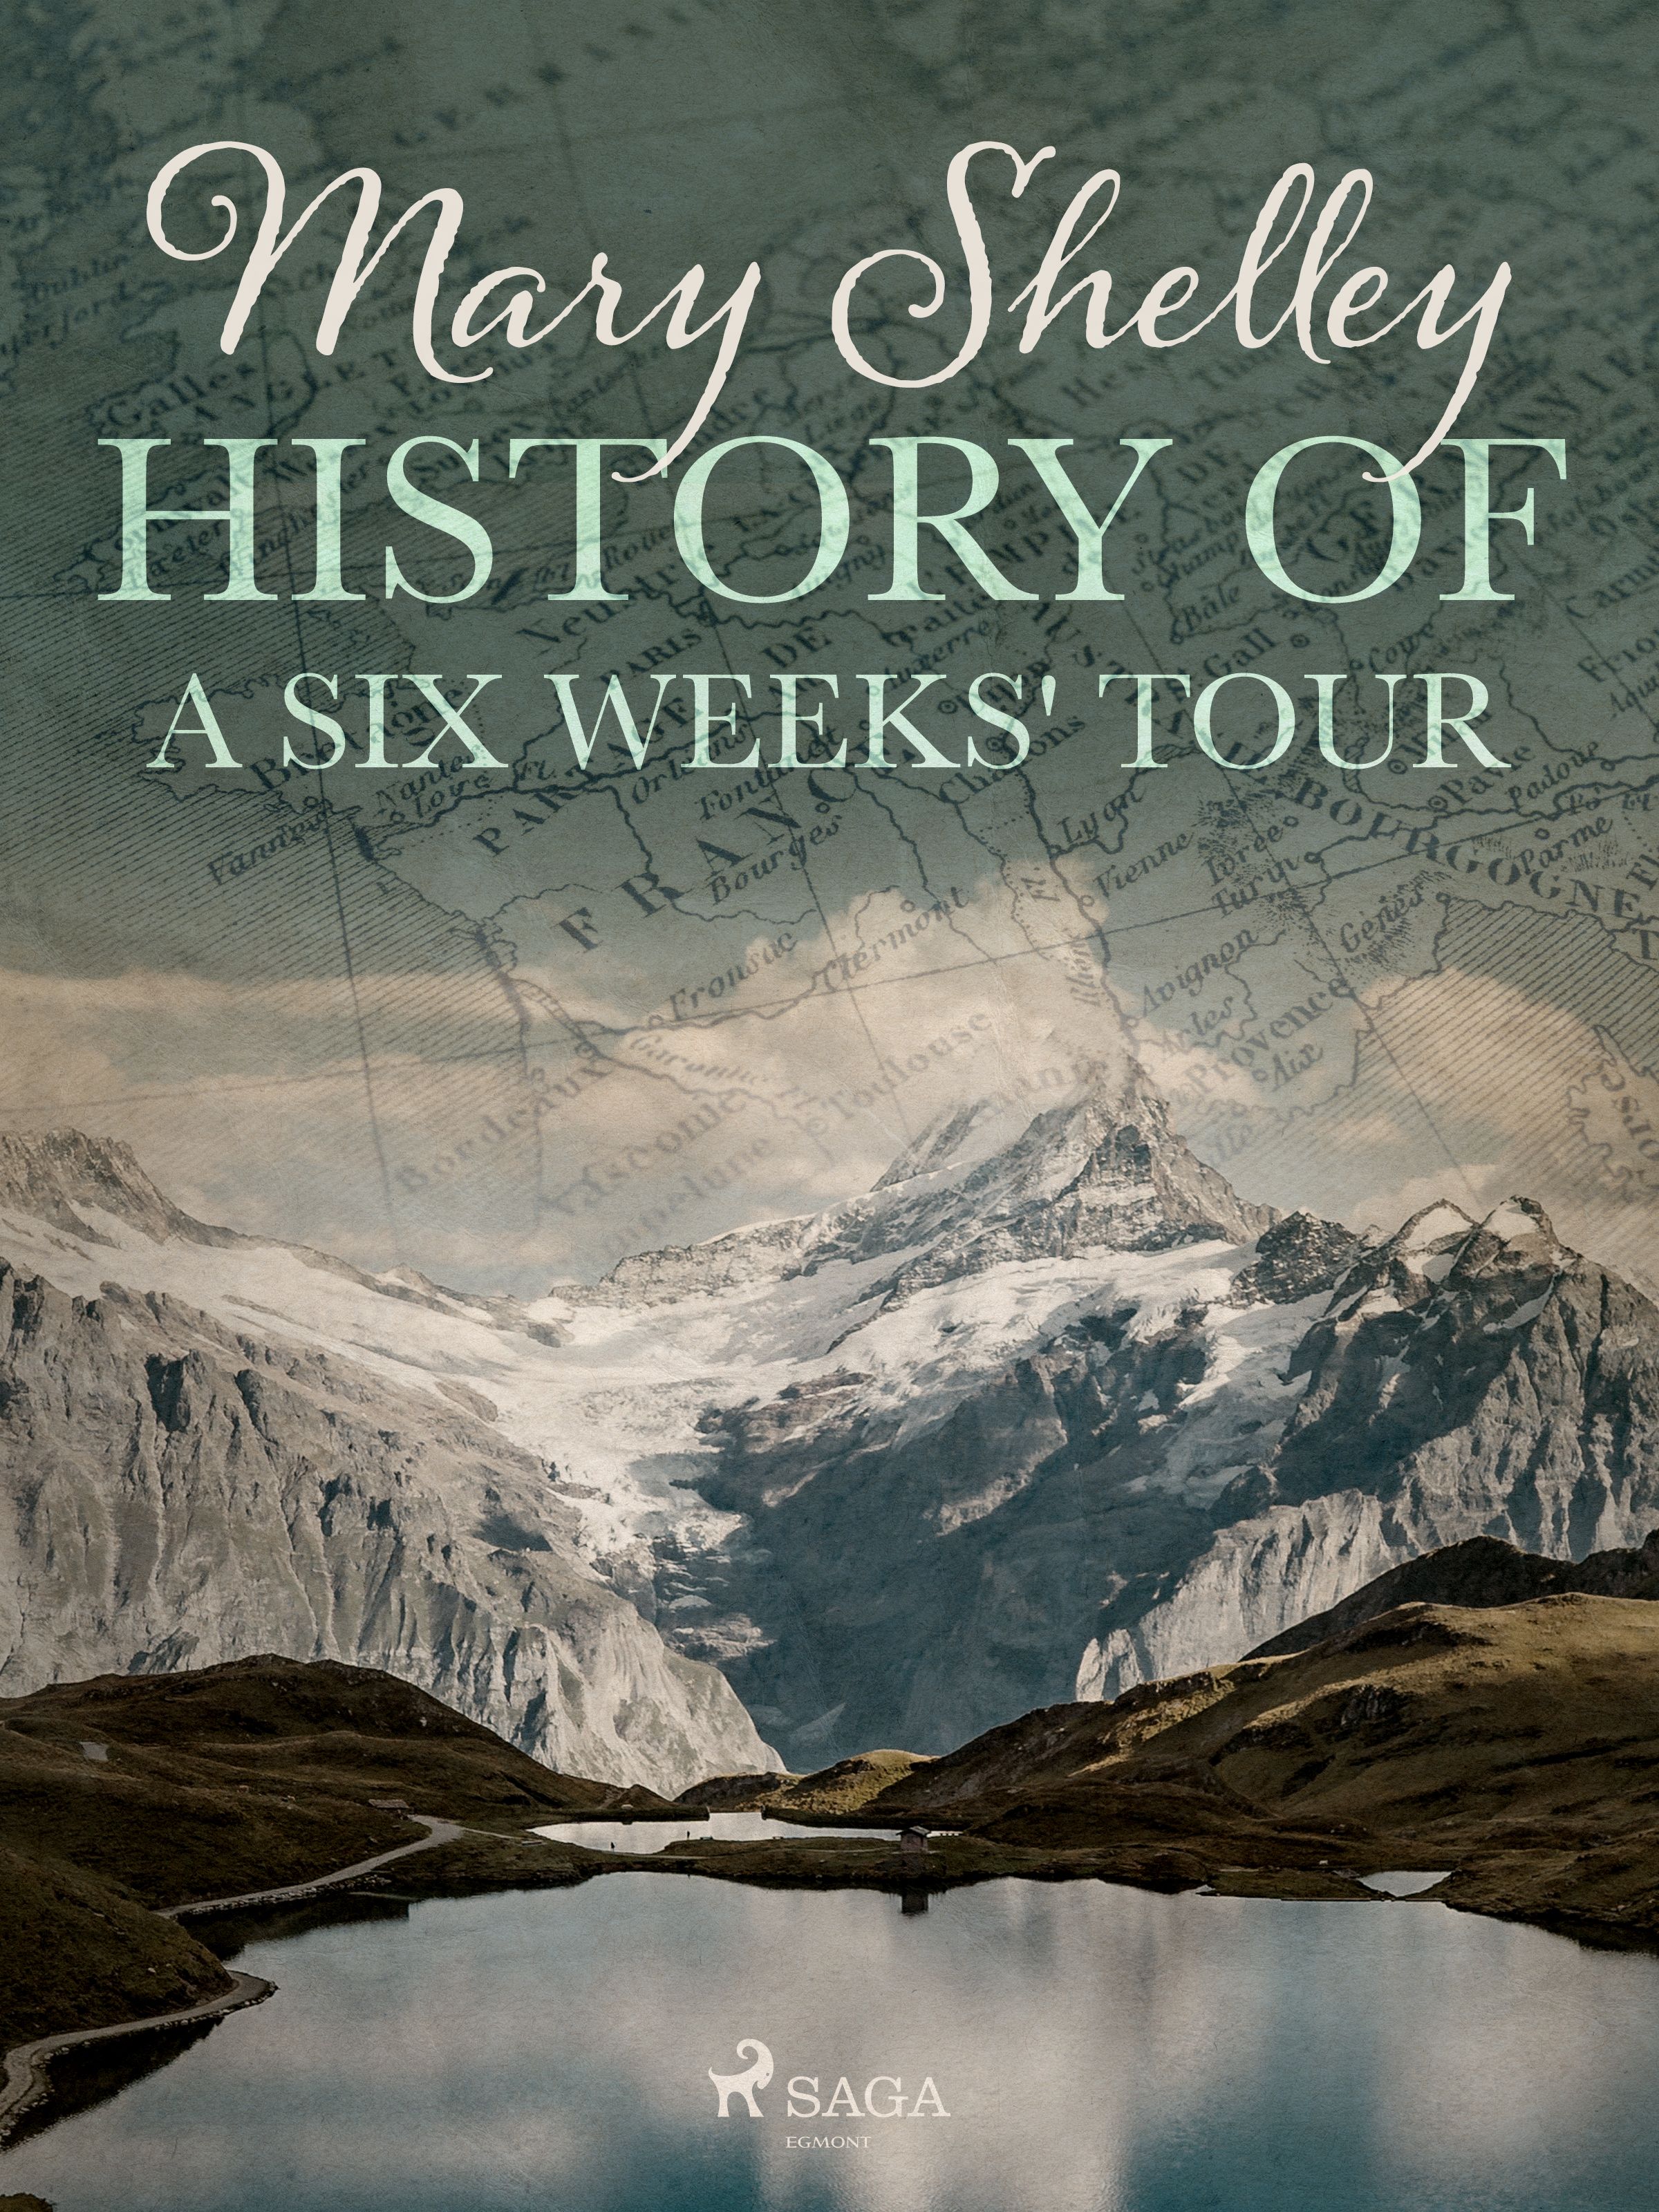 History of a Six Weeks' Tour, e-bok av Mary Shelley